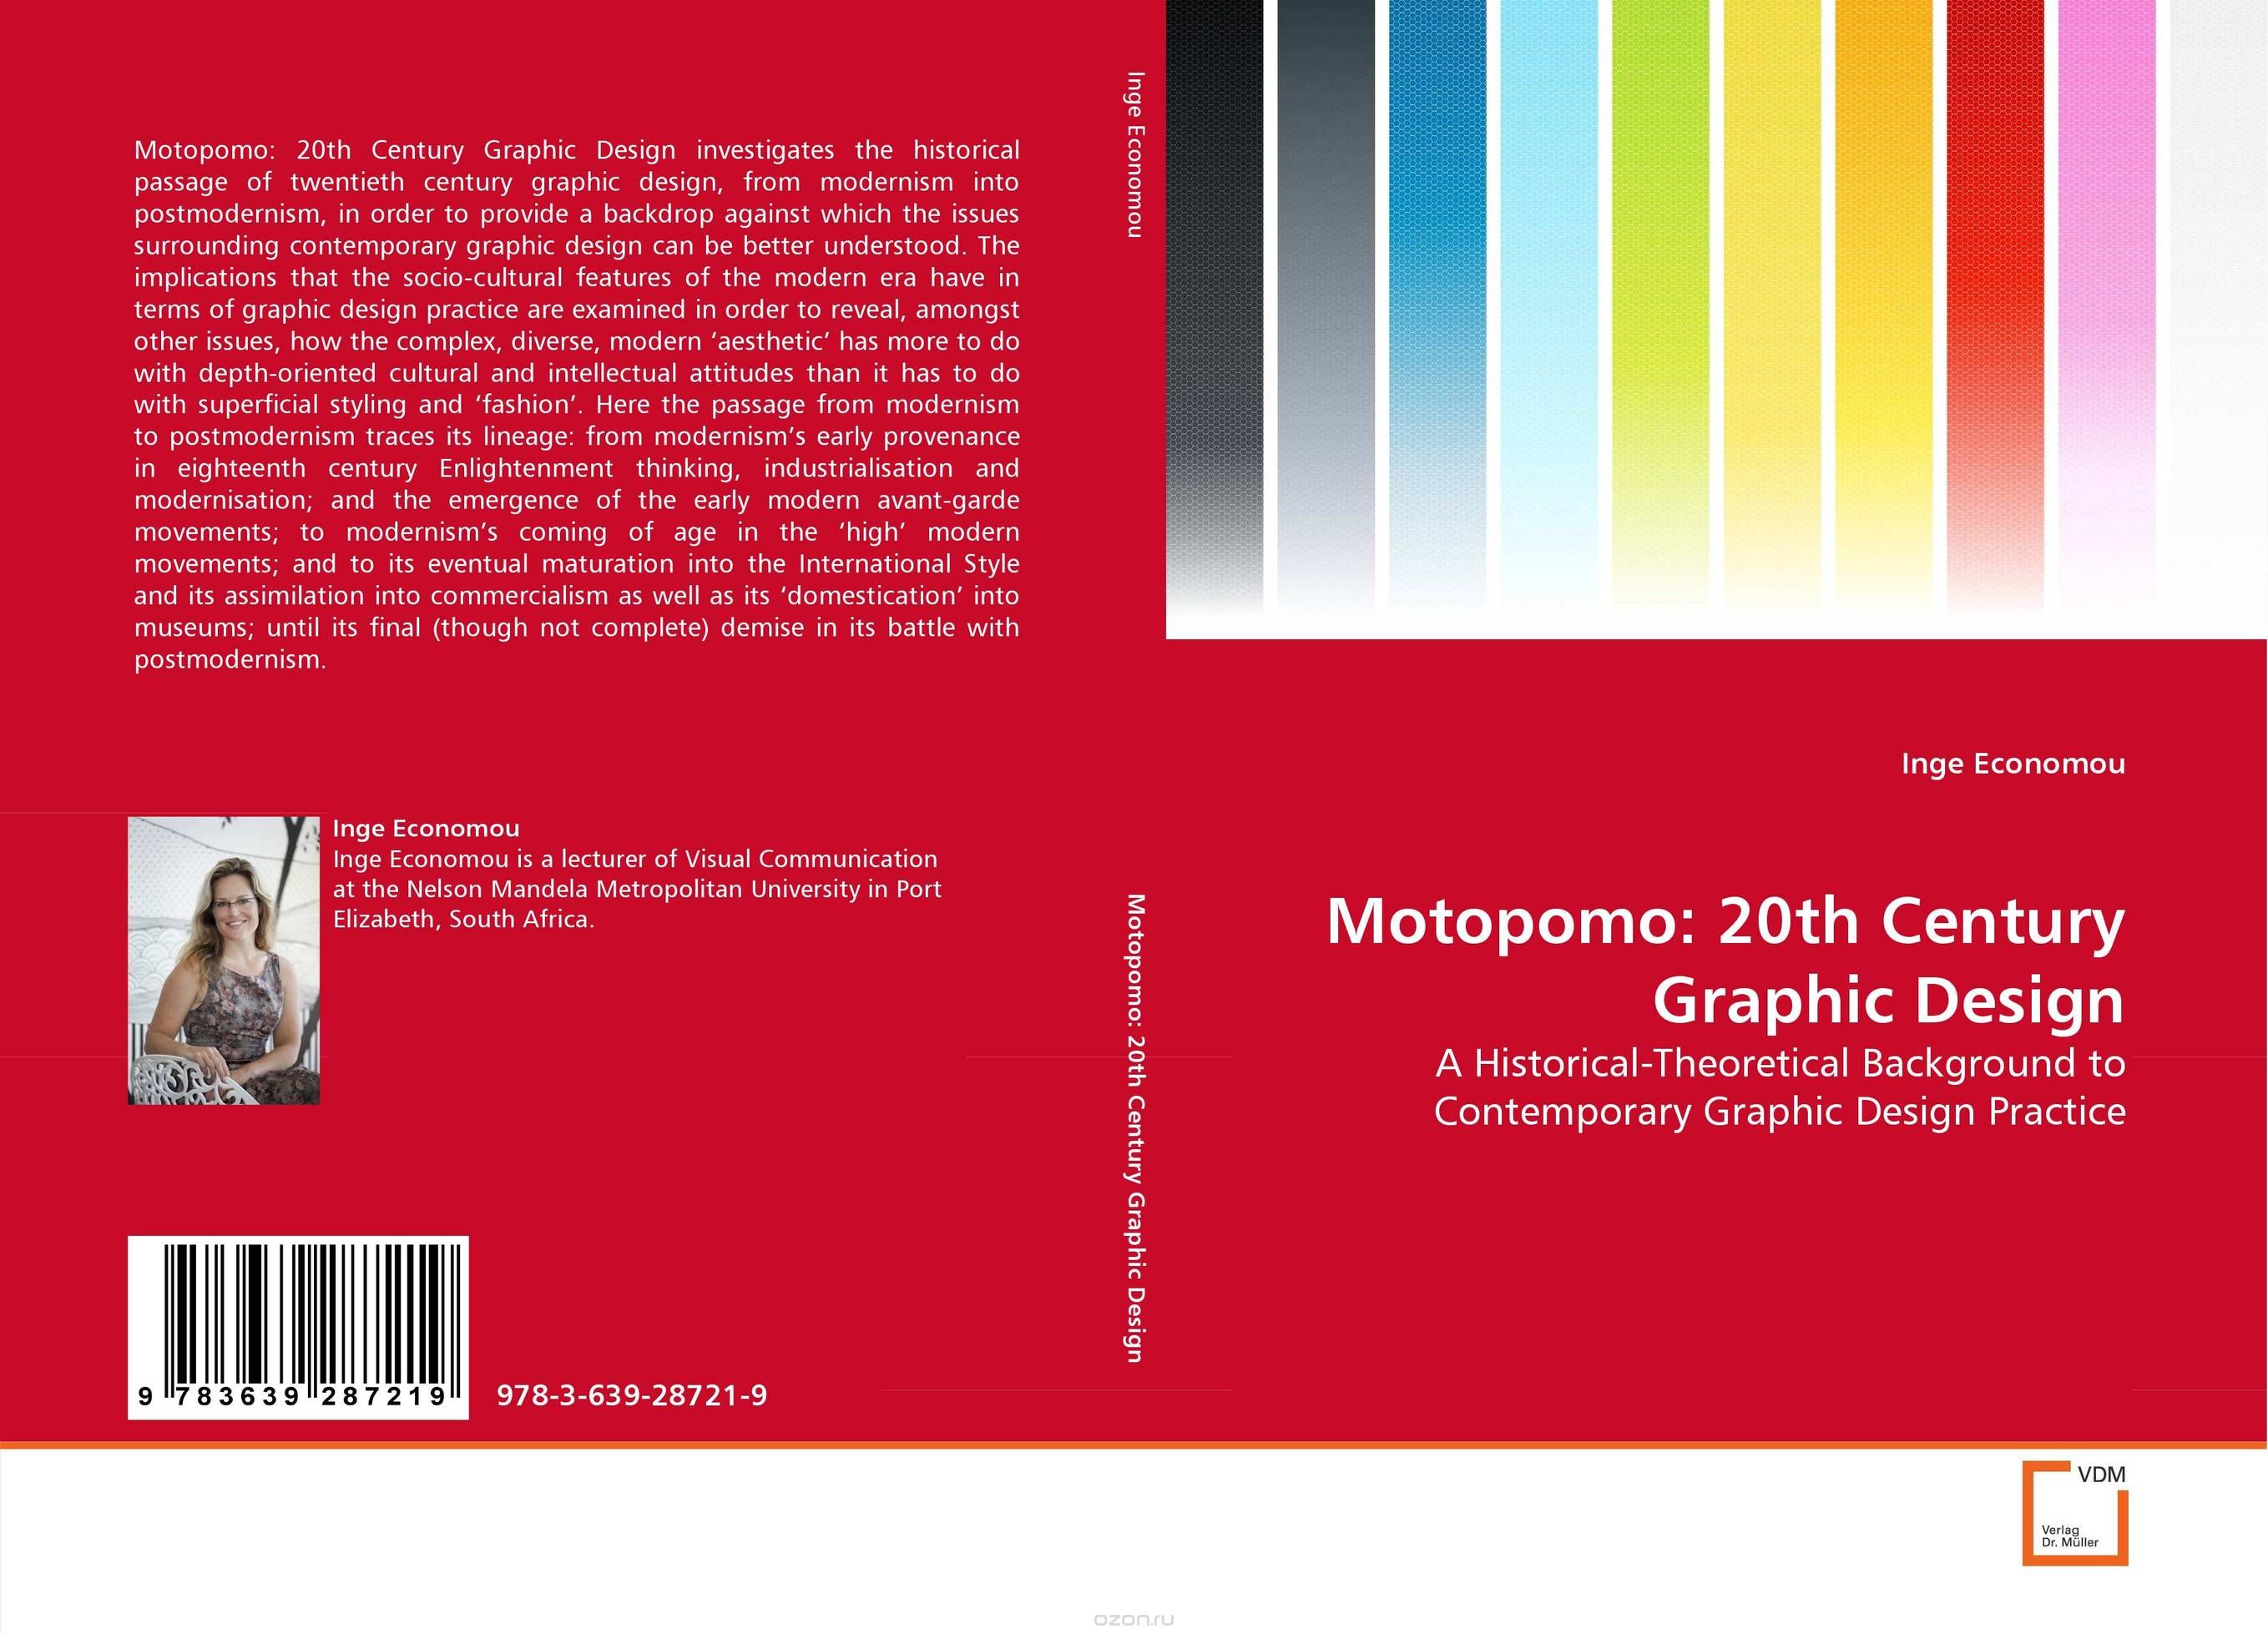 Скачать книгу "Motopomo: 20th Century Graphic Design"